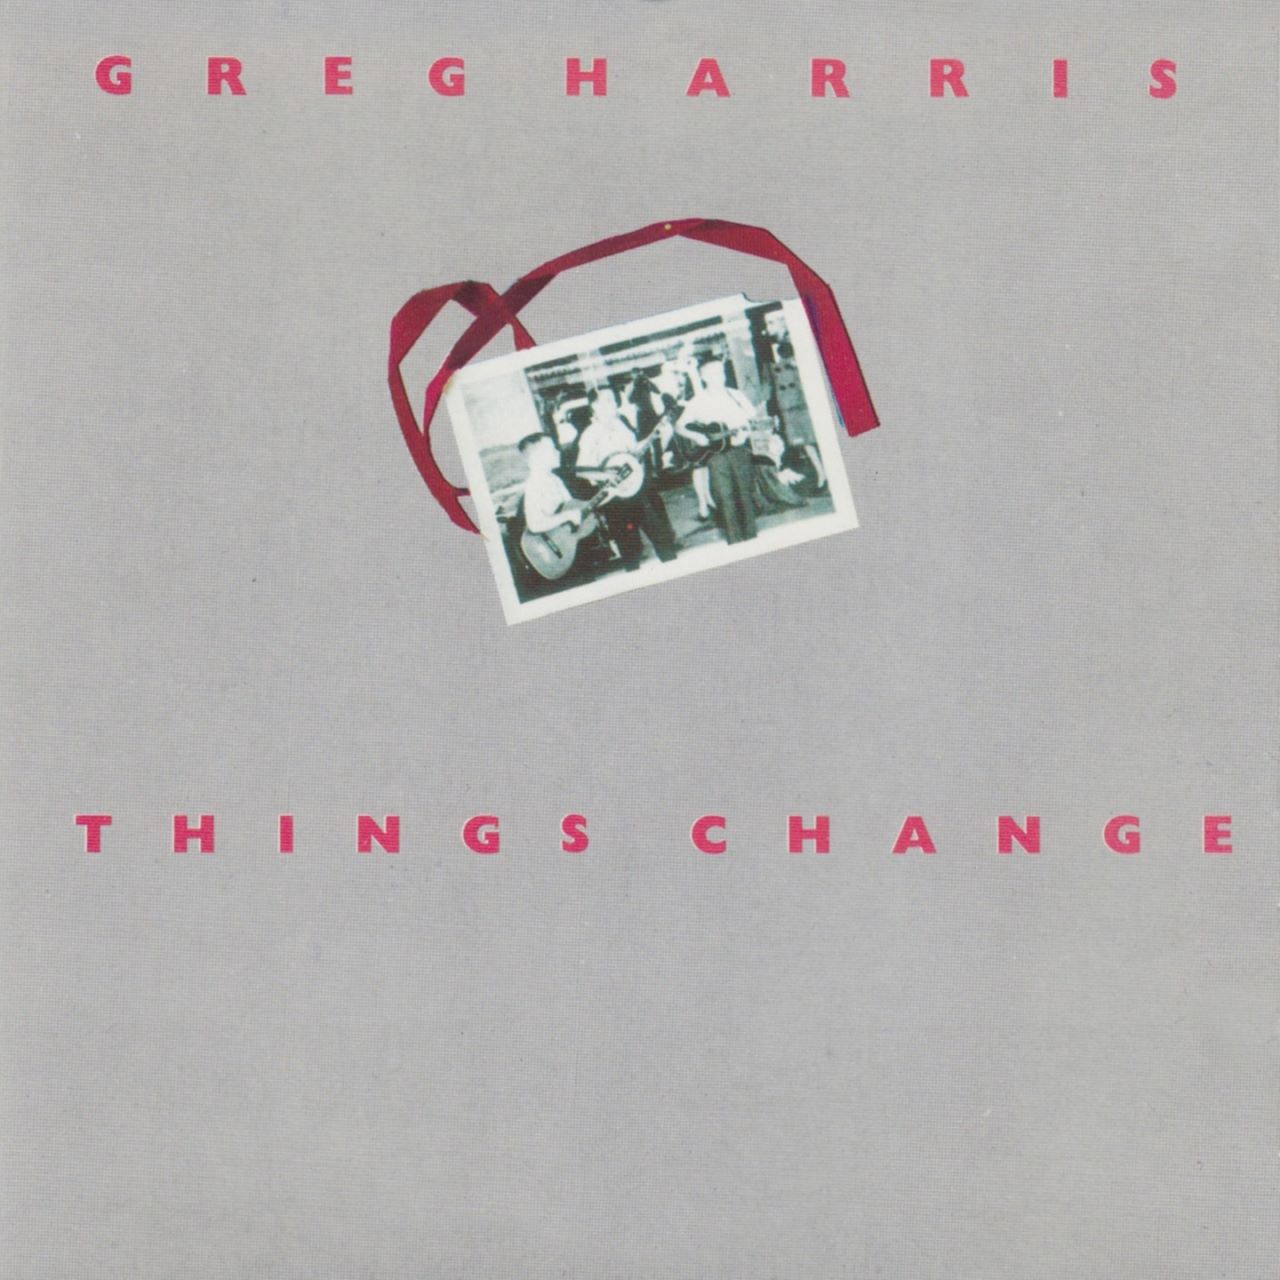 Greg Harris - Things Change cover album